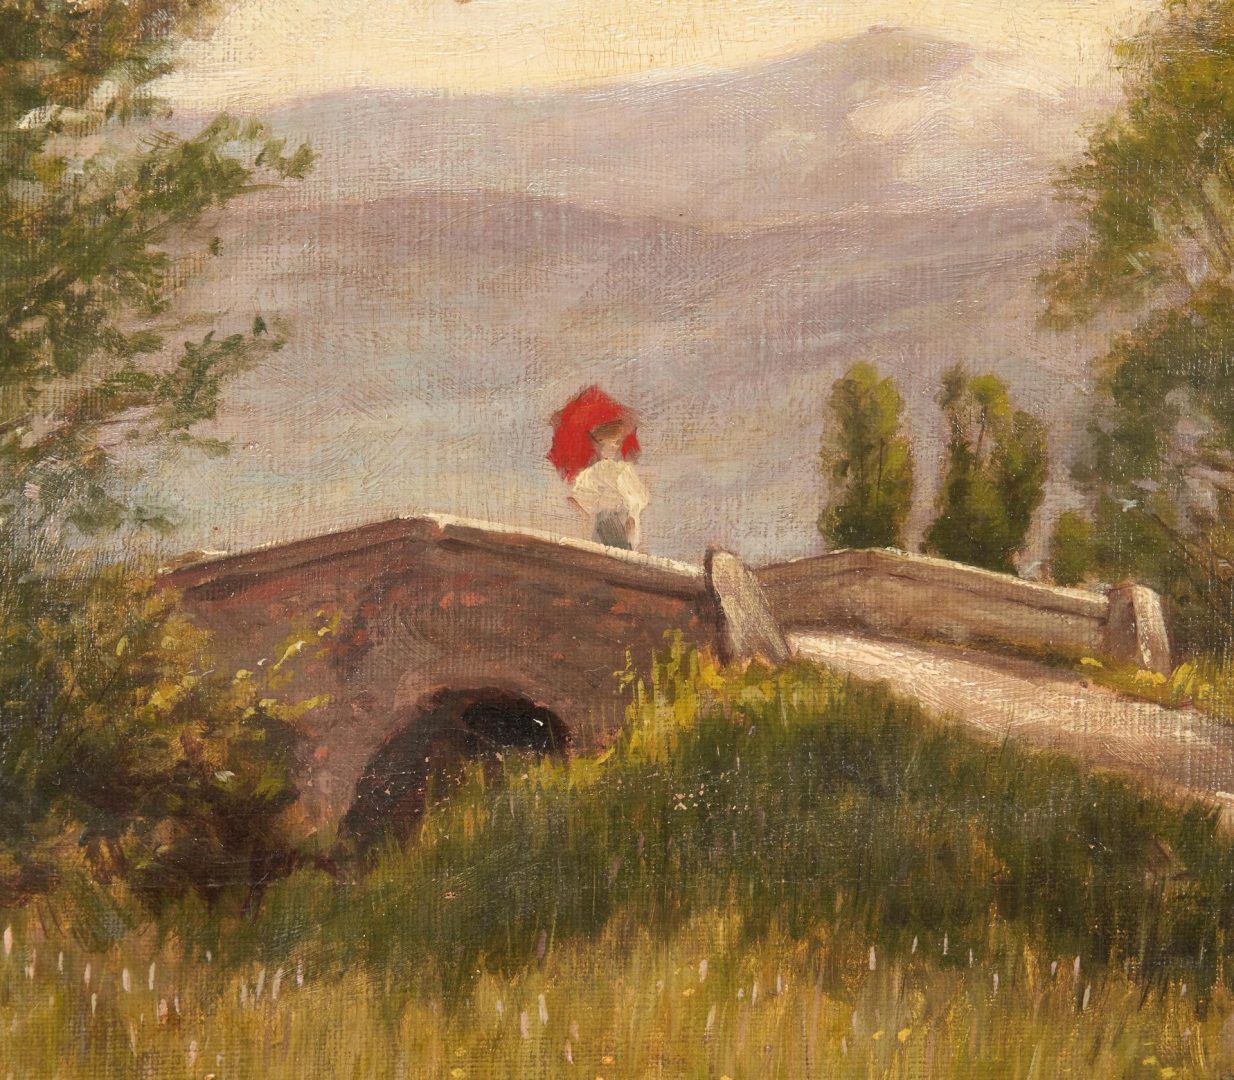 Lot 429: 2 O/C Landscape Paintings with Bridges, incl. European & American School